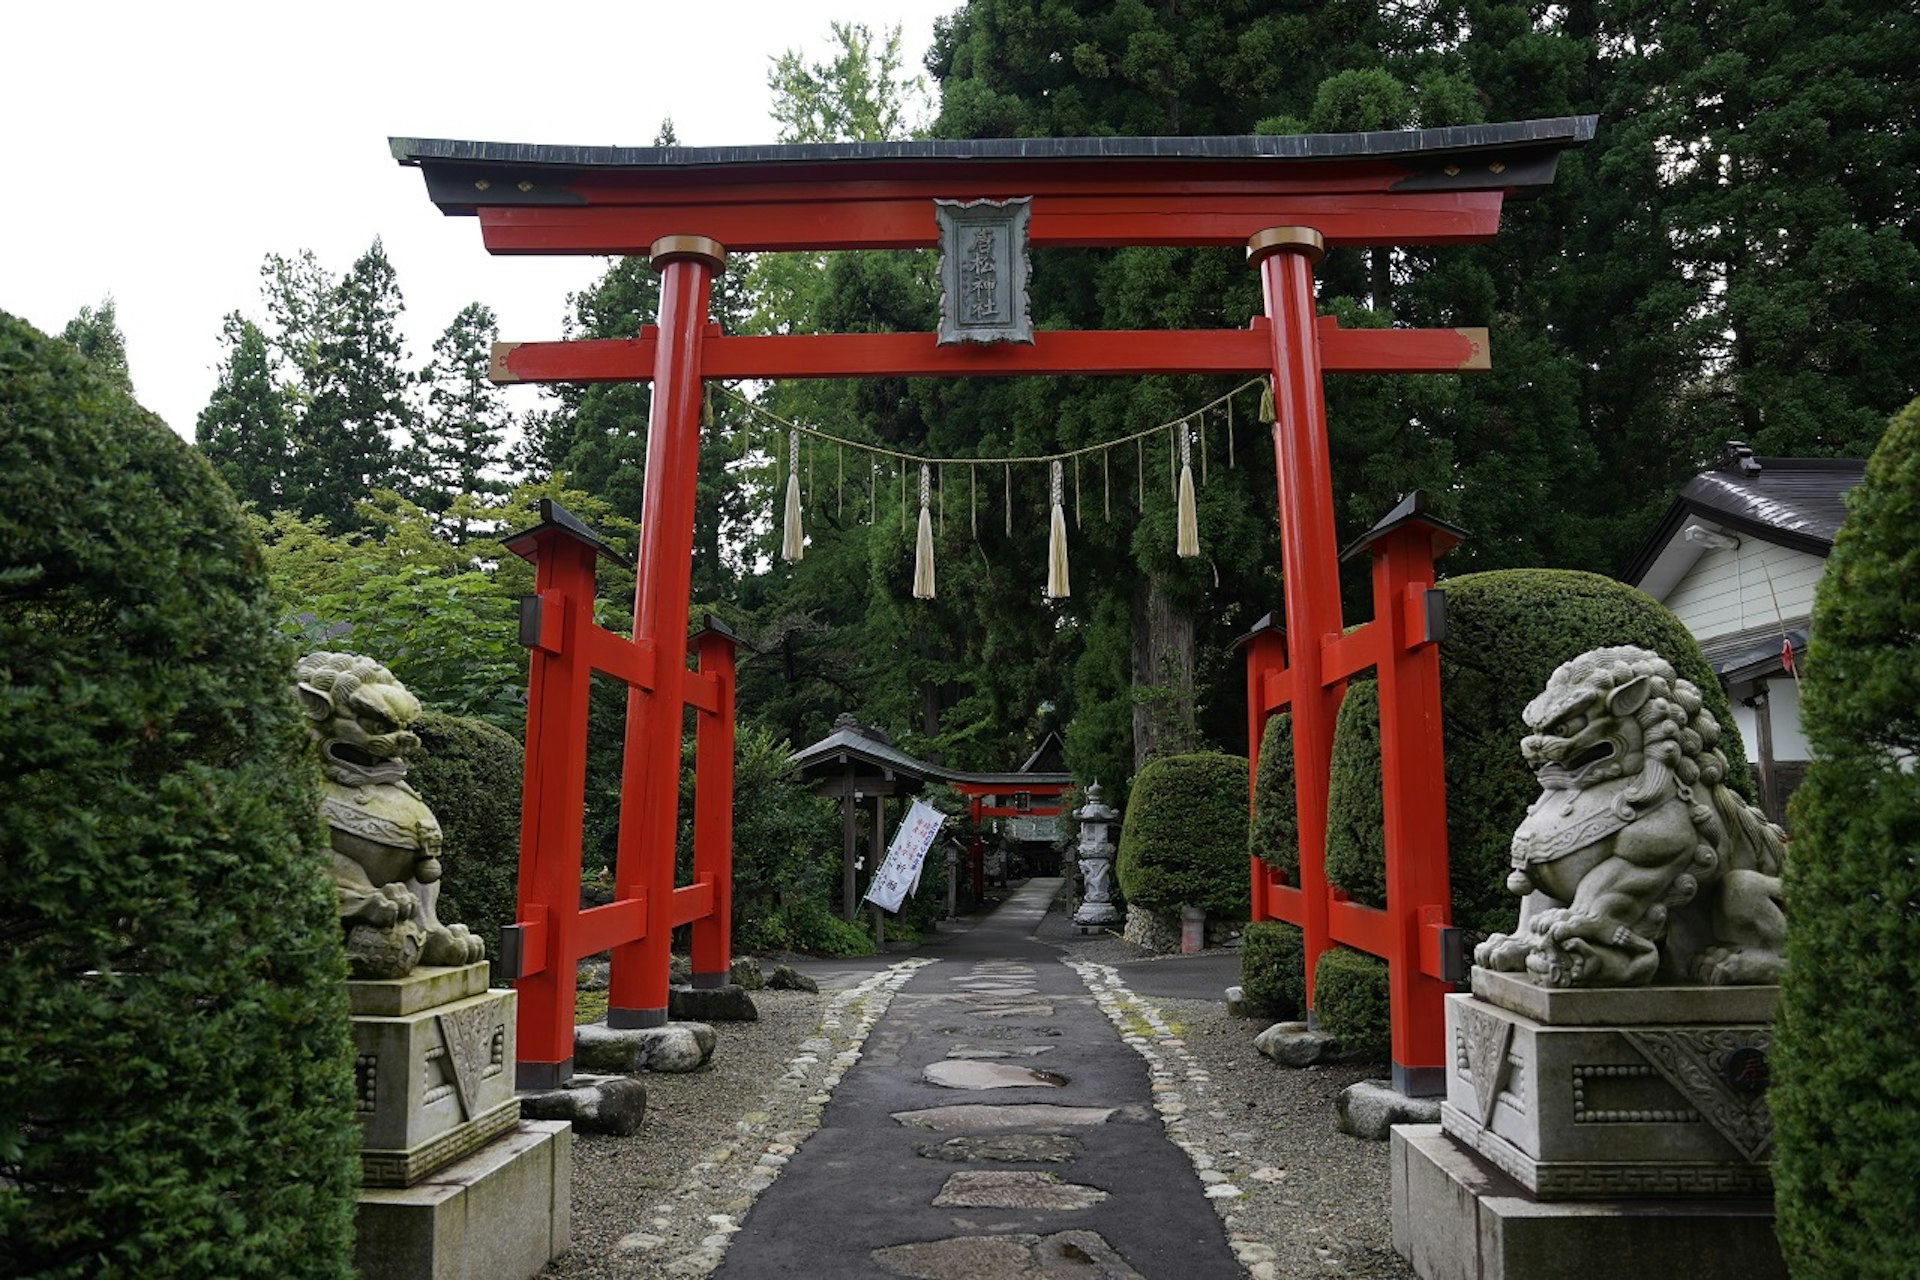 The large red gate at the Karamatsu-jinja shrine